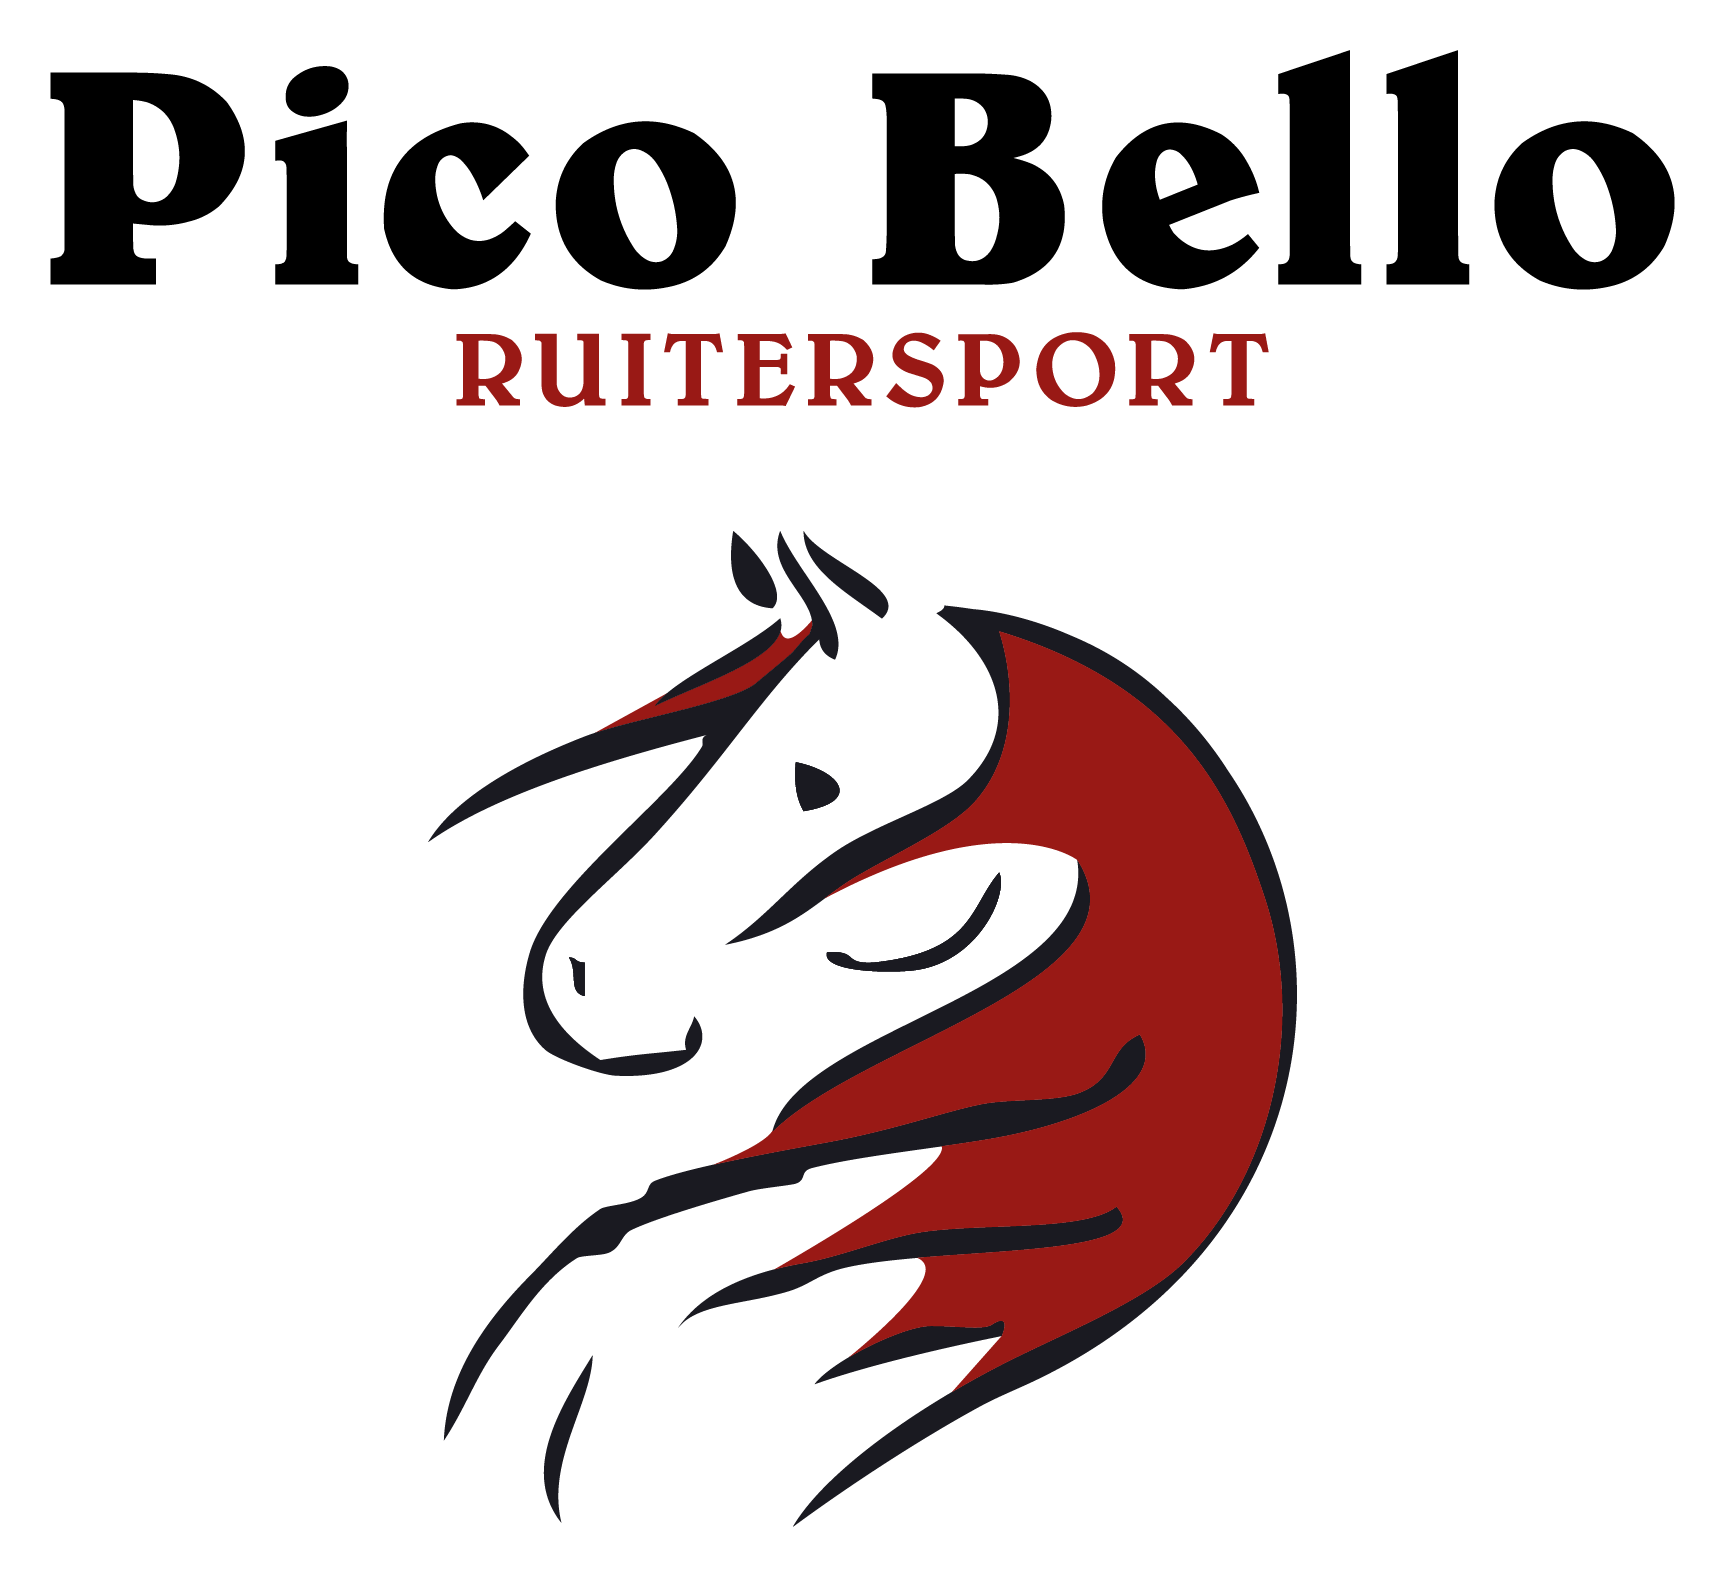 Pico Bello Ruitersport in Snellegem door Lieve Dereu